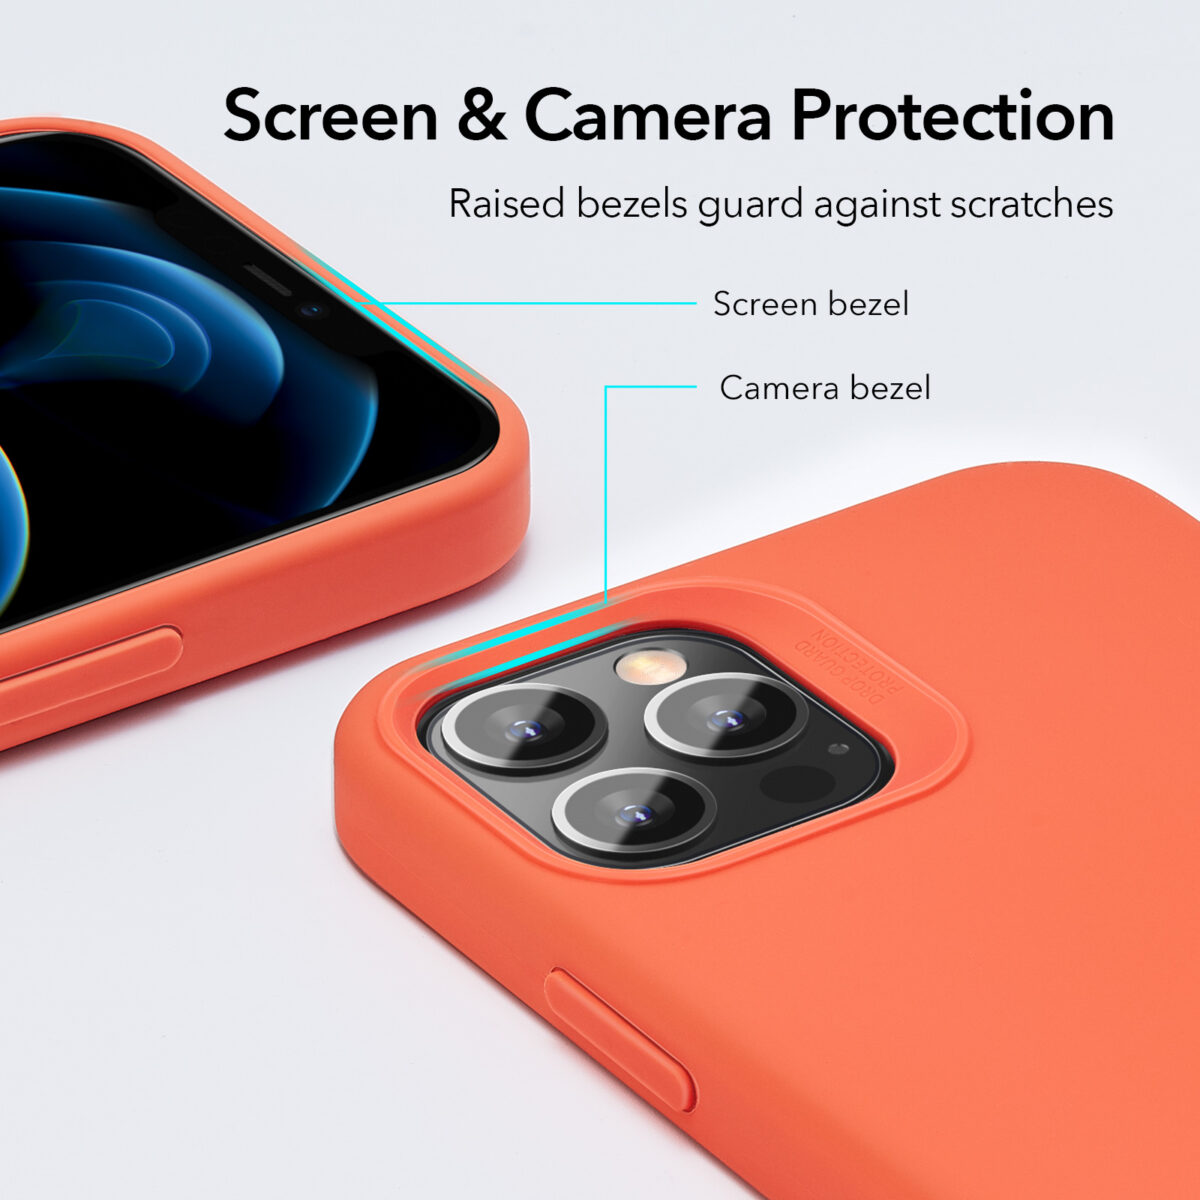 [Screen & Camera Protection] – Coral Orange